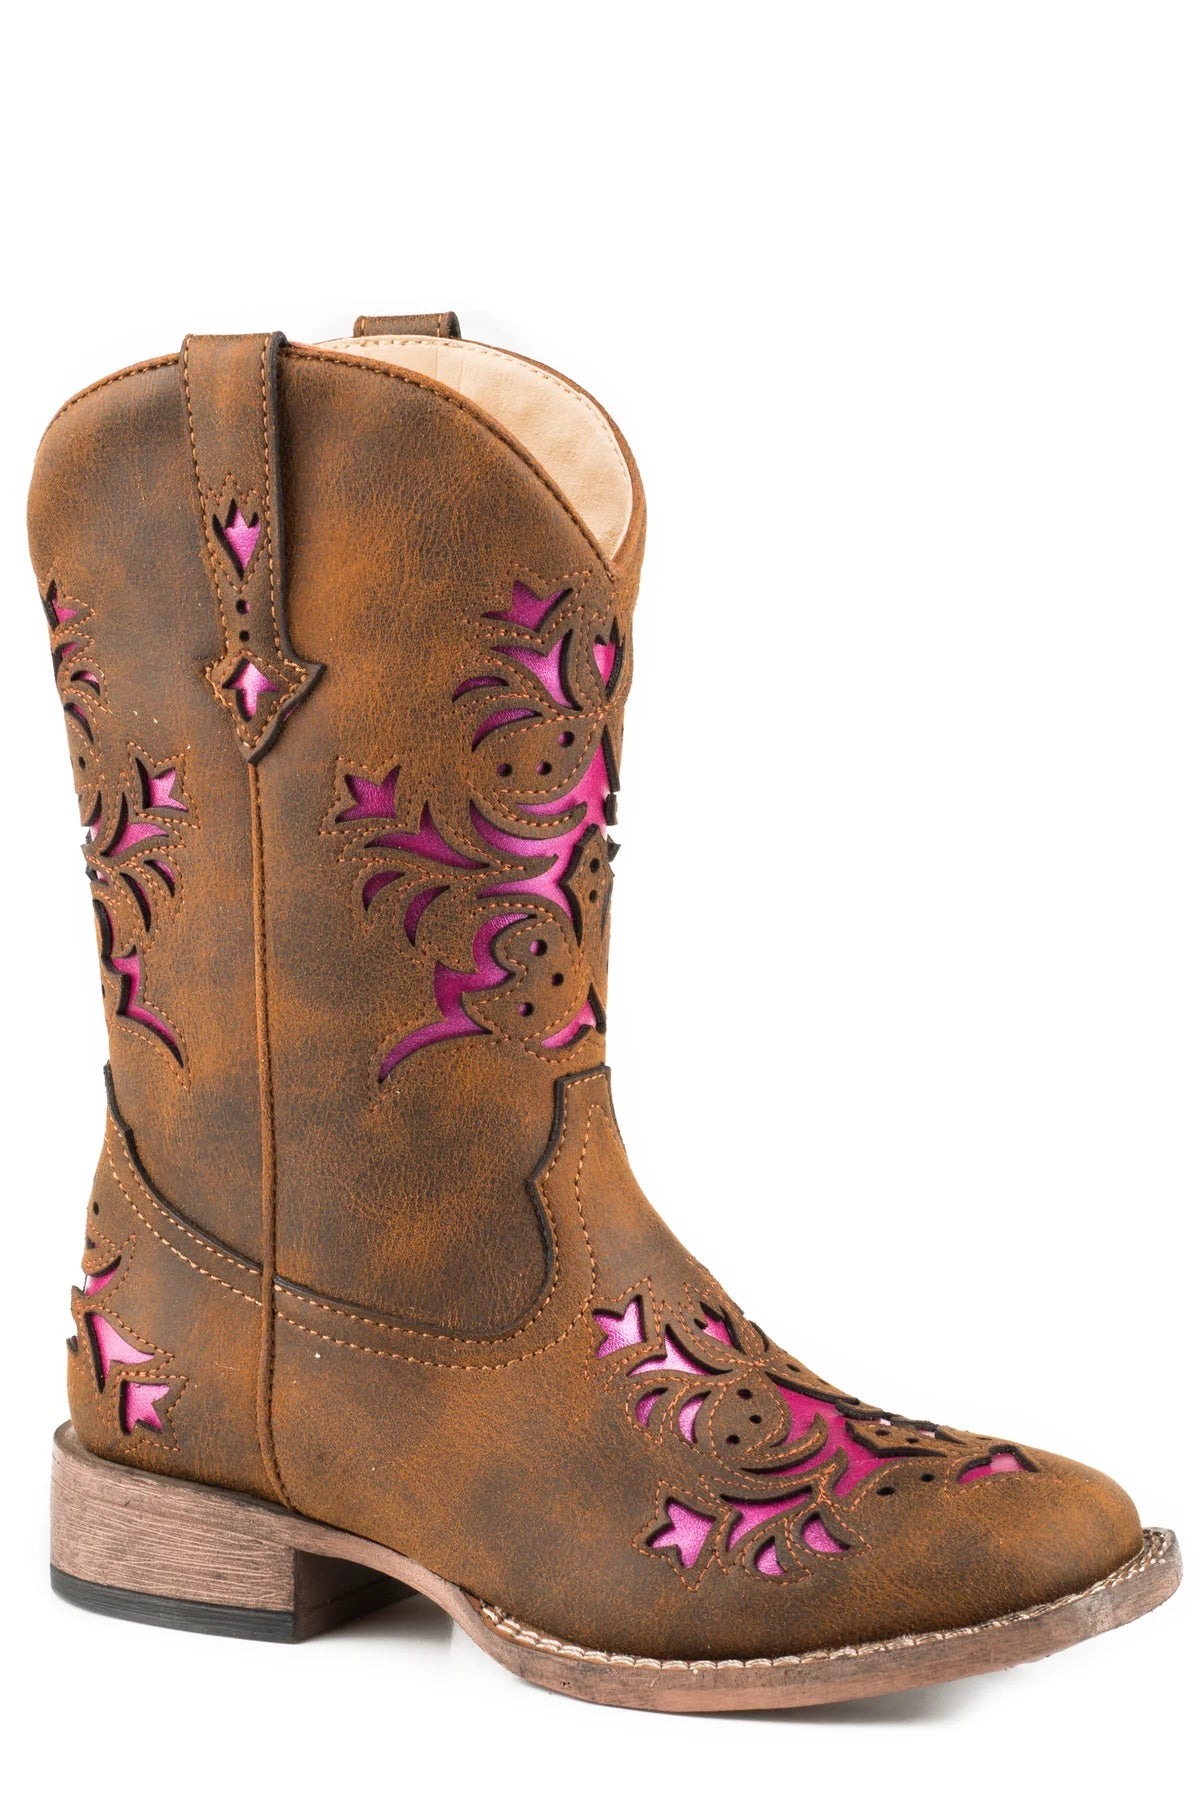 Lola Western Boots - Roper